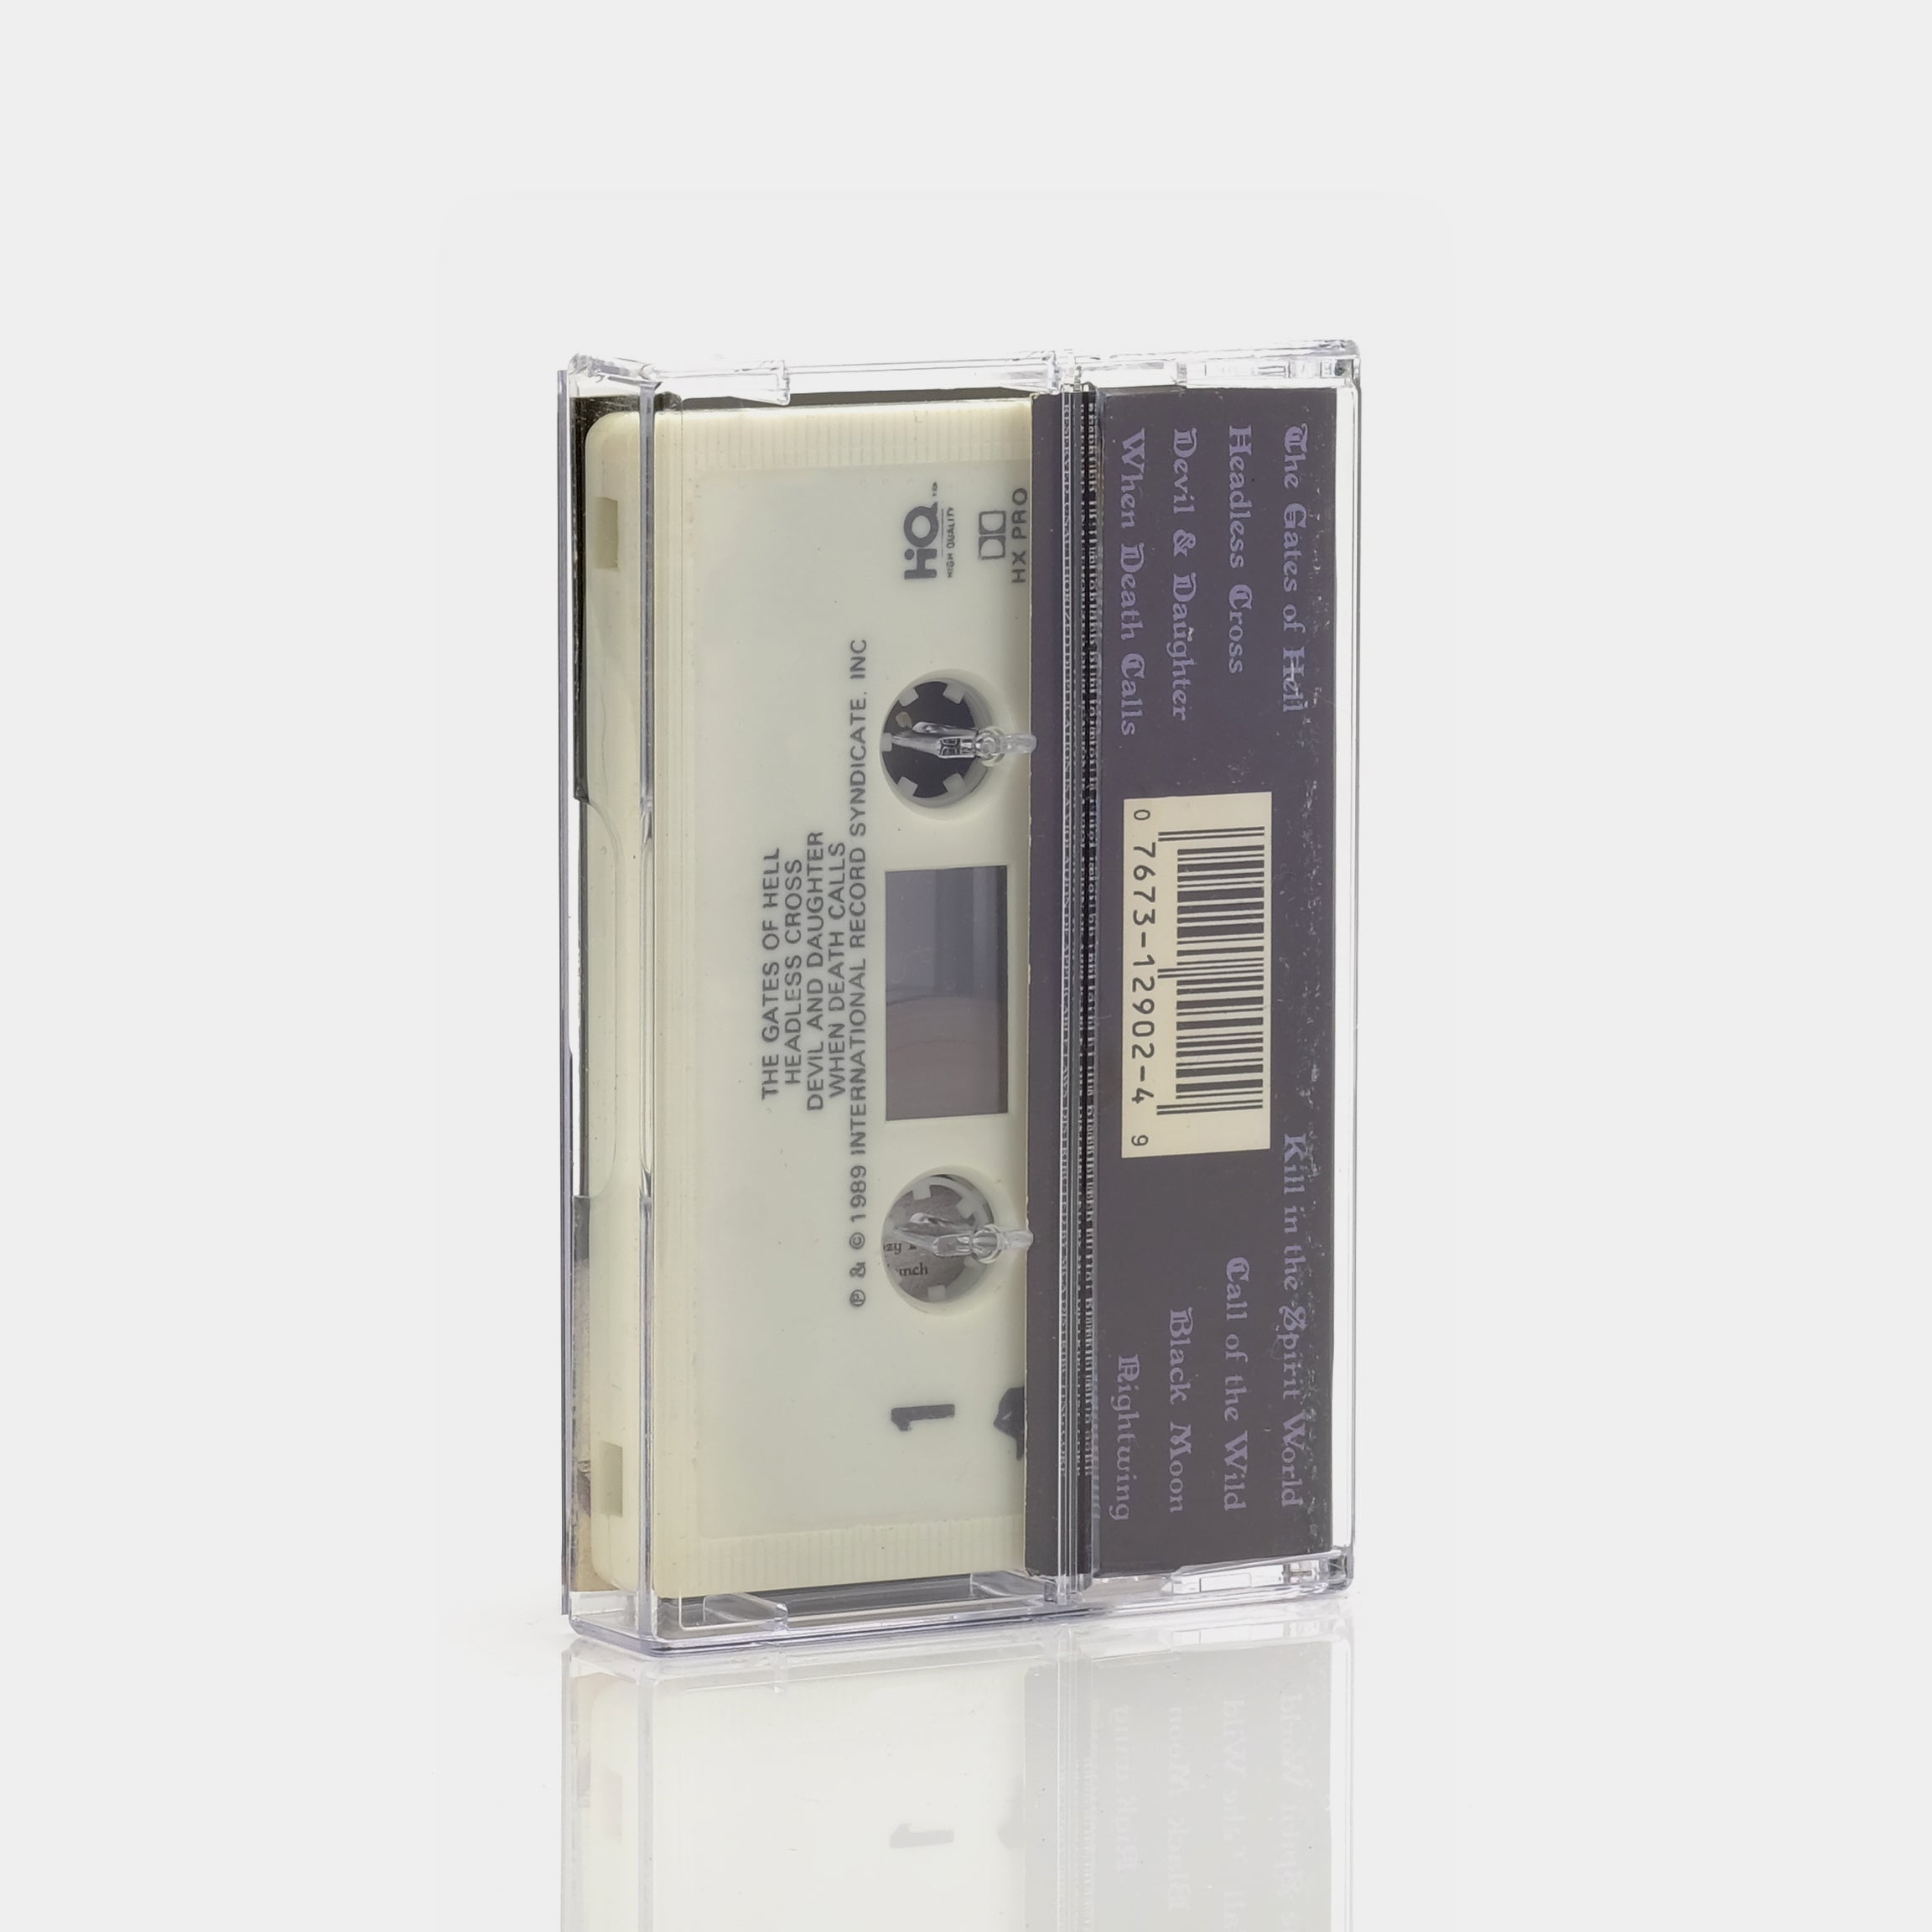 Black Sabbath - Headless Cross Cassette Tape